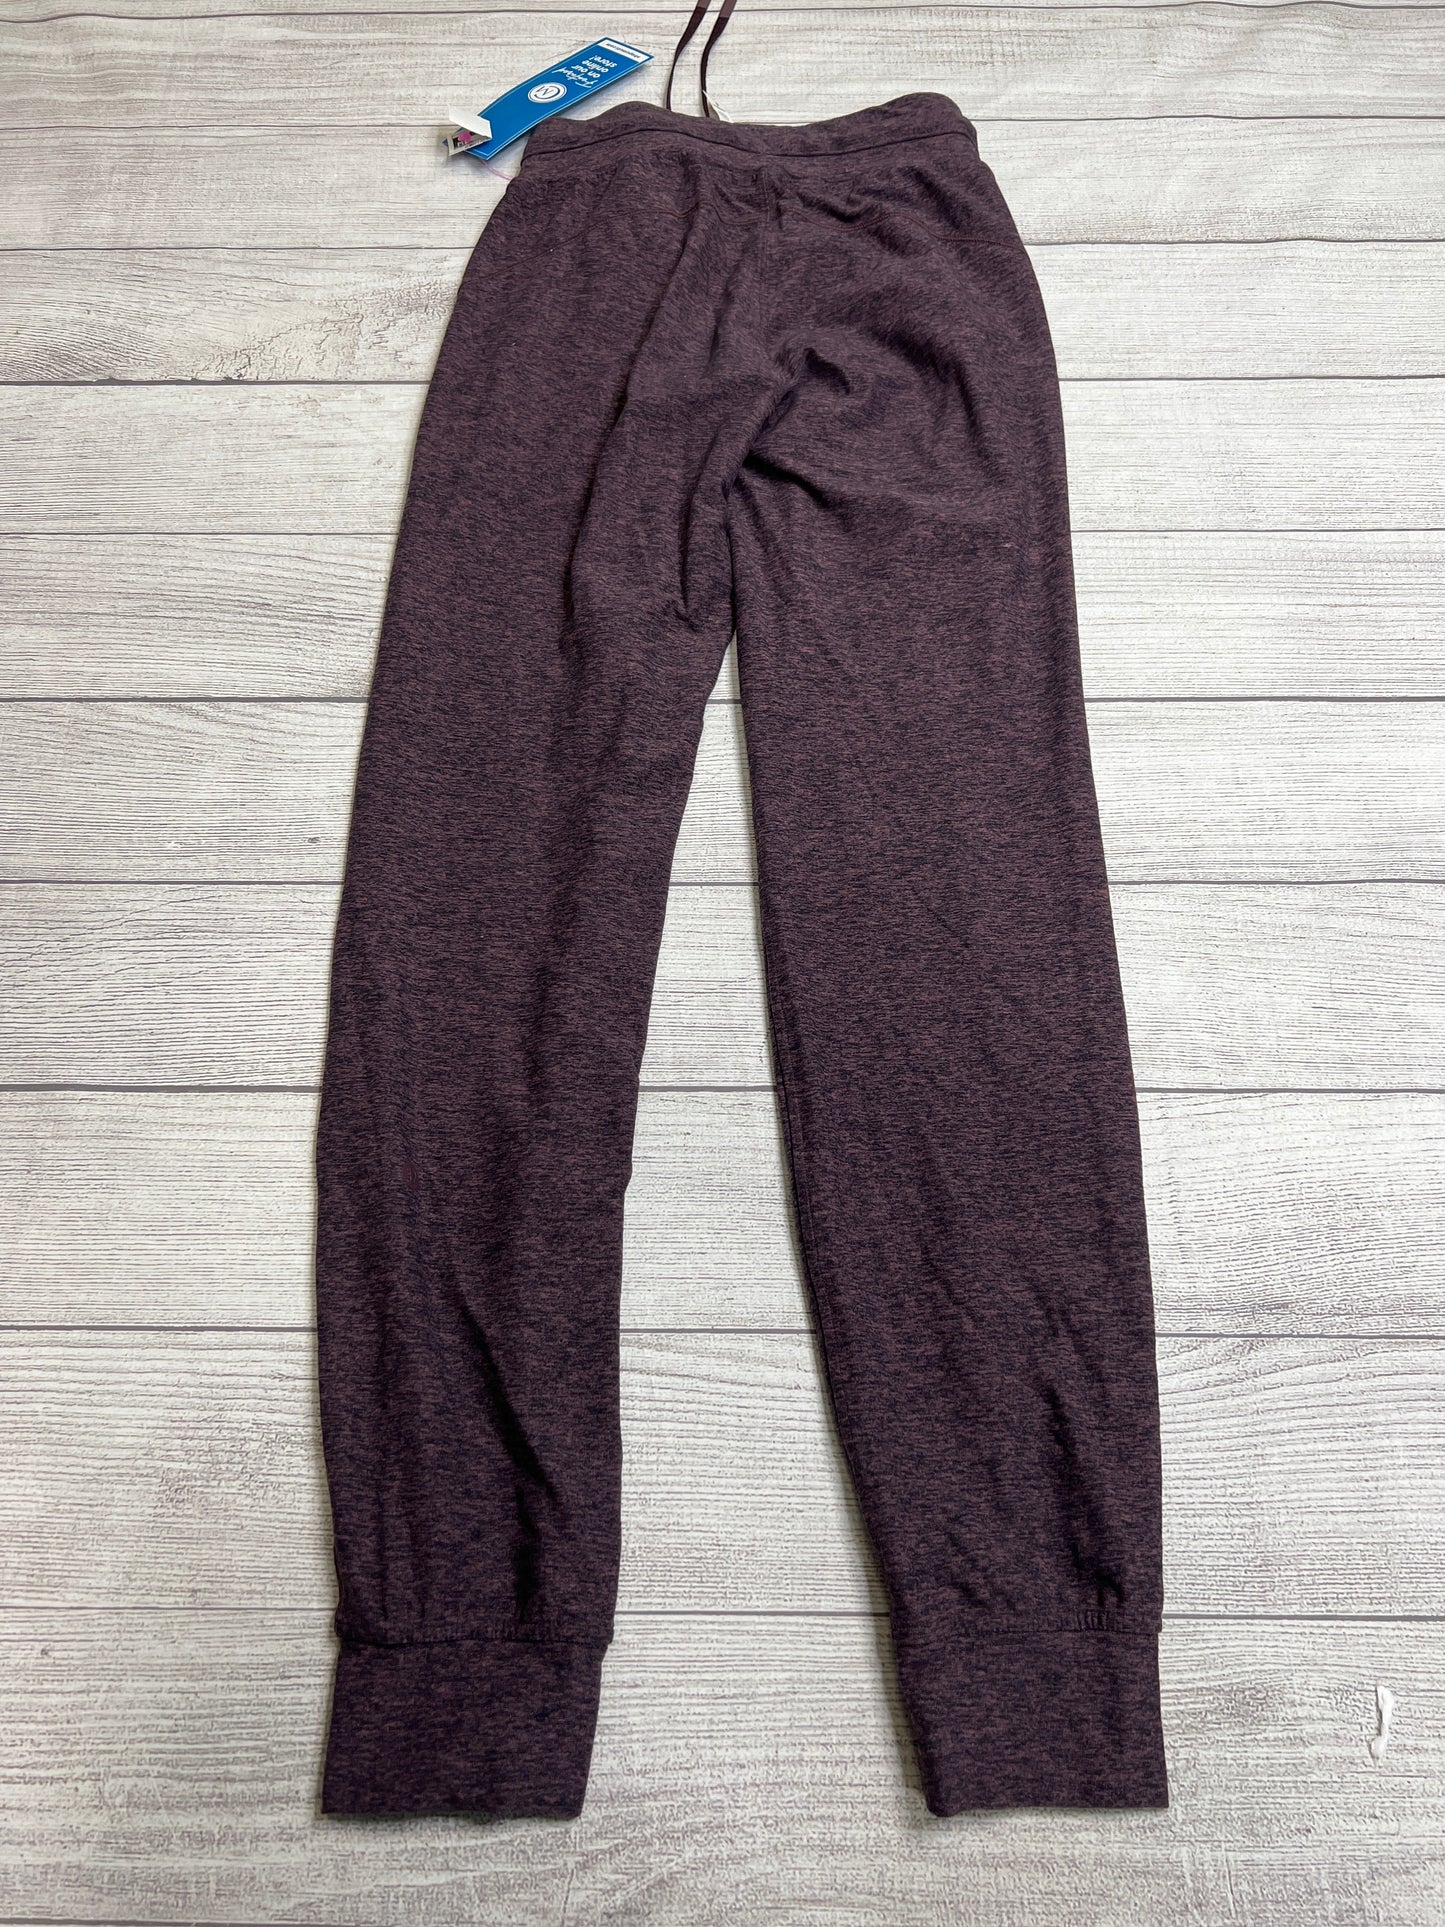 Athletic Pants By Lululemon  Size: 2